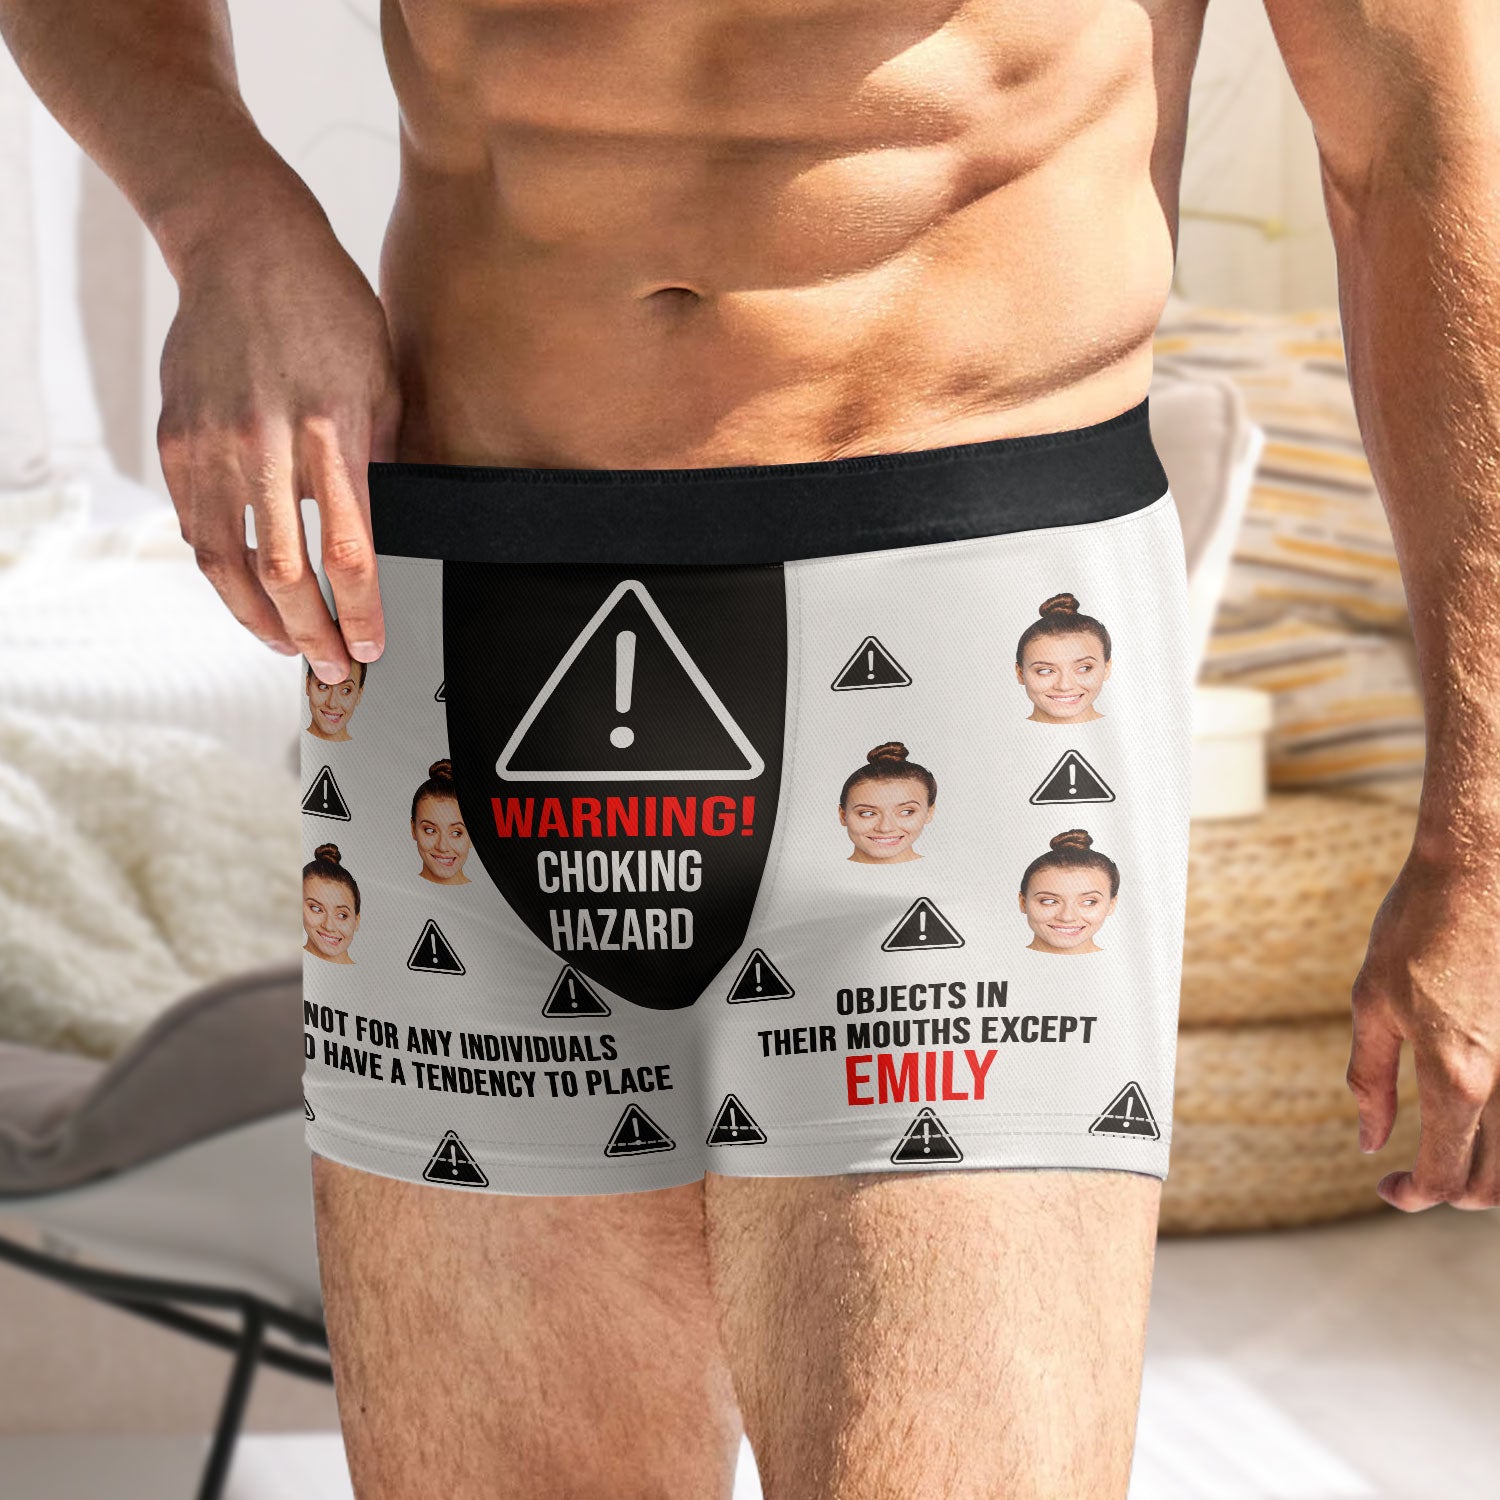 Choking Hazard Men's Personalised Boxers Novelty Underwear